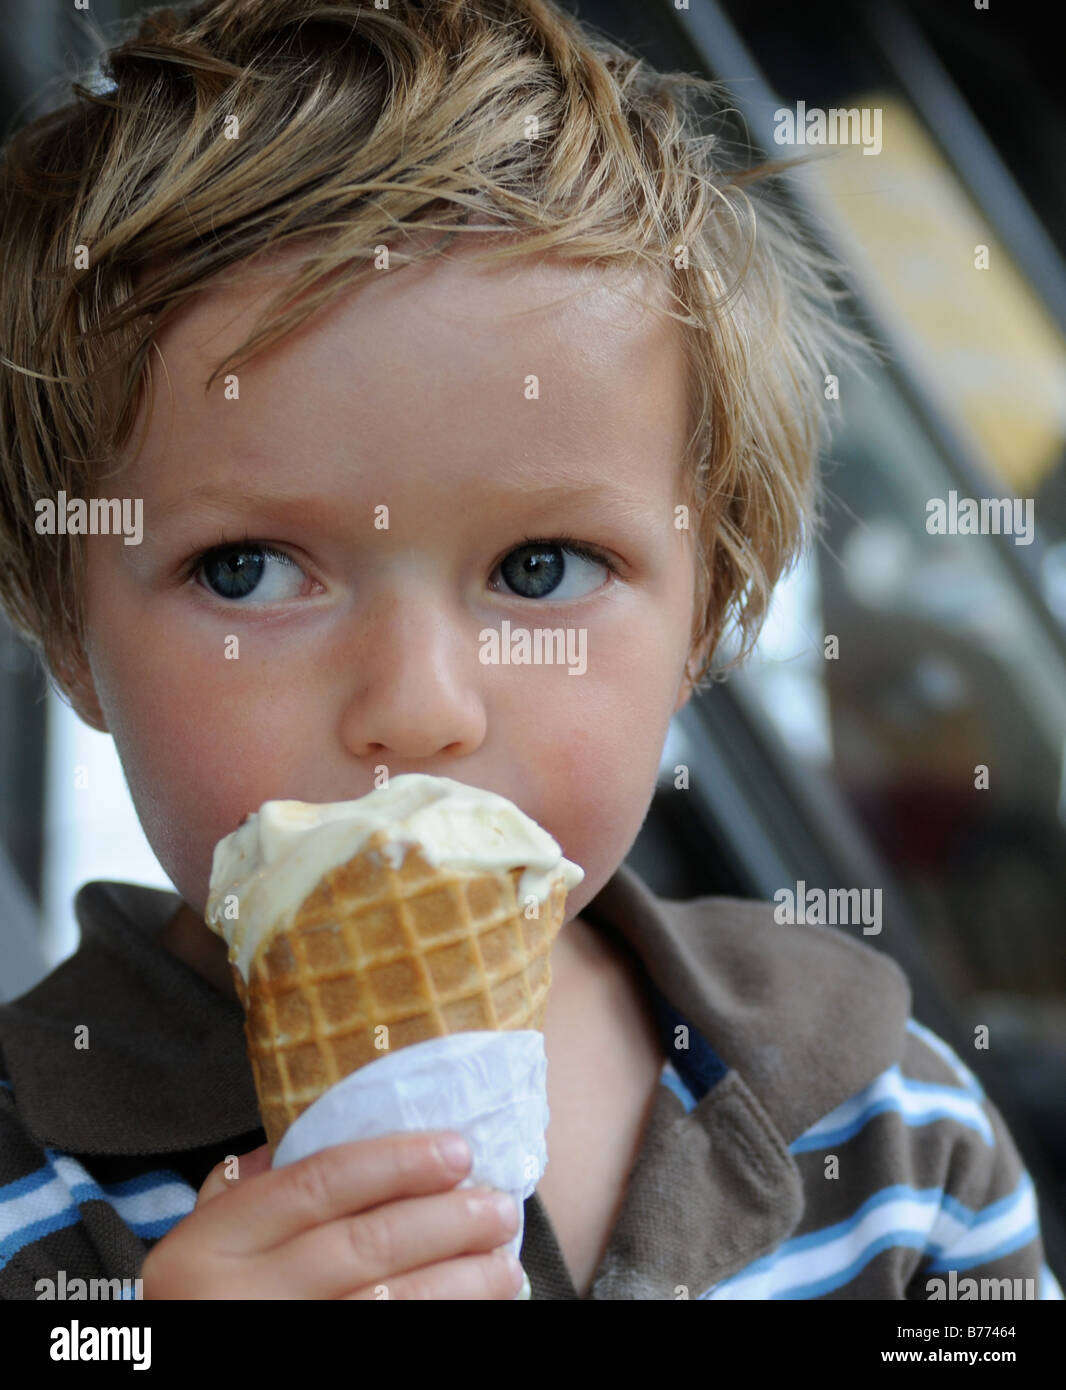 A boy eating ice cream. Stock Photo